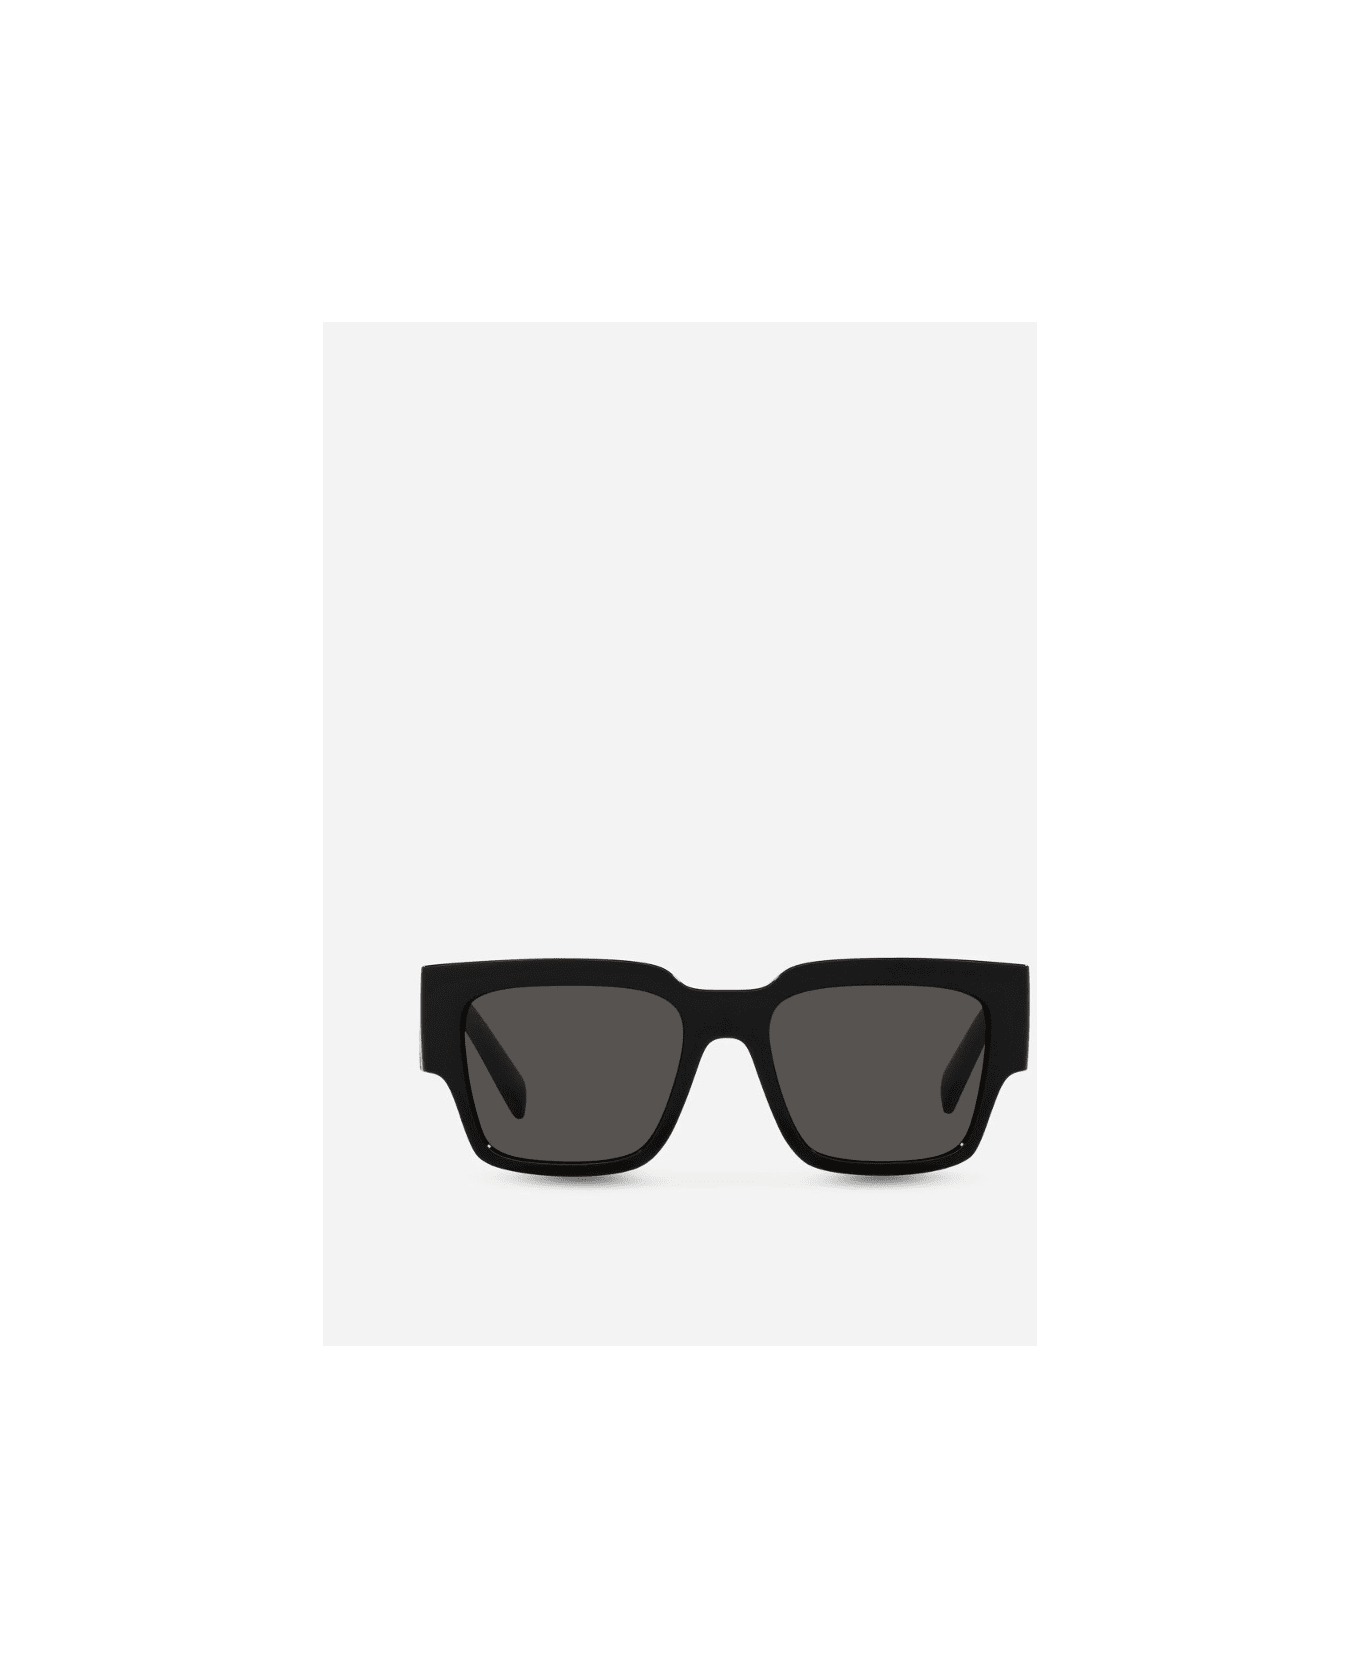 Dolce & Gabbana Eyewear DG6184s 501-87 Sunglasses - Nero サングラス